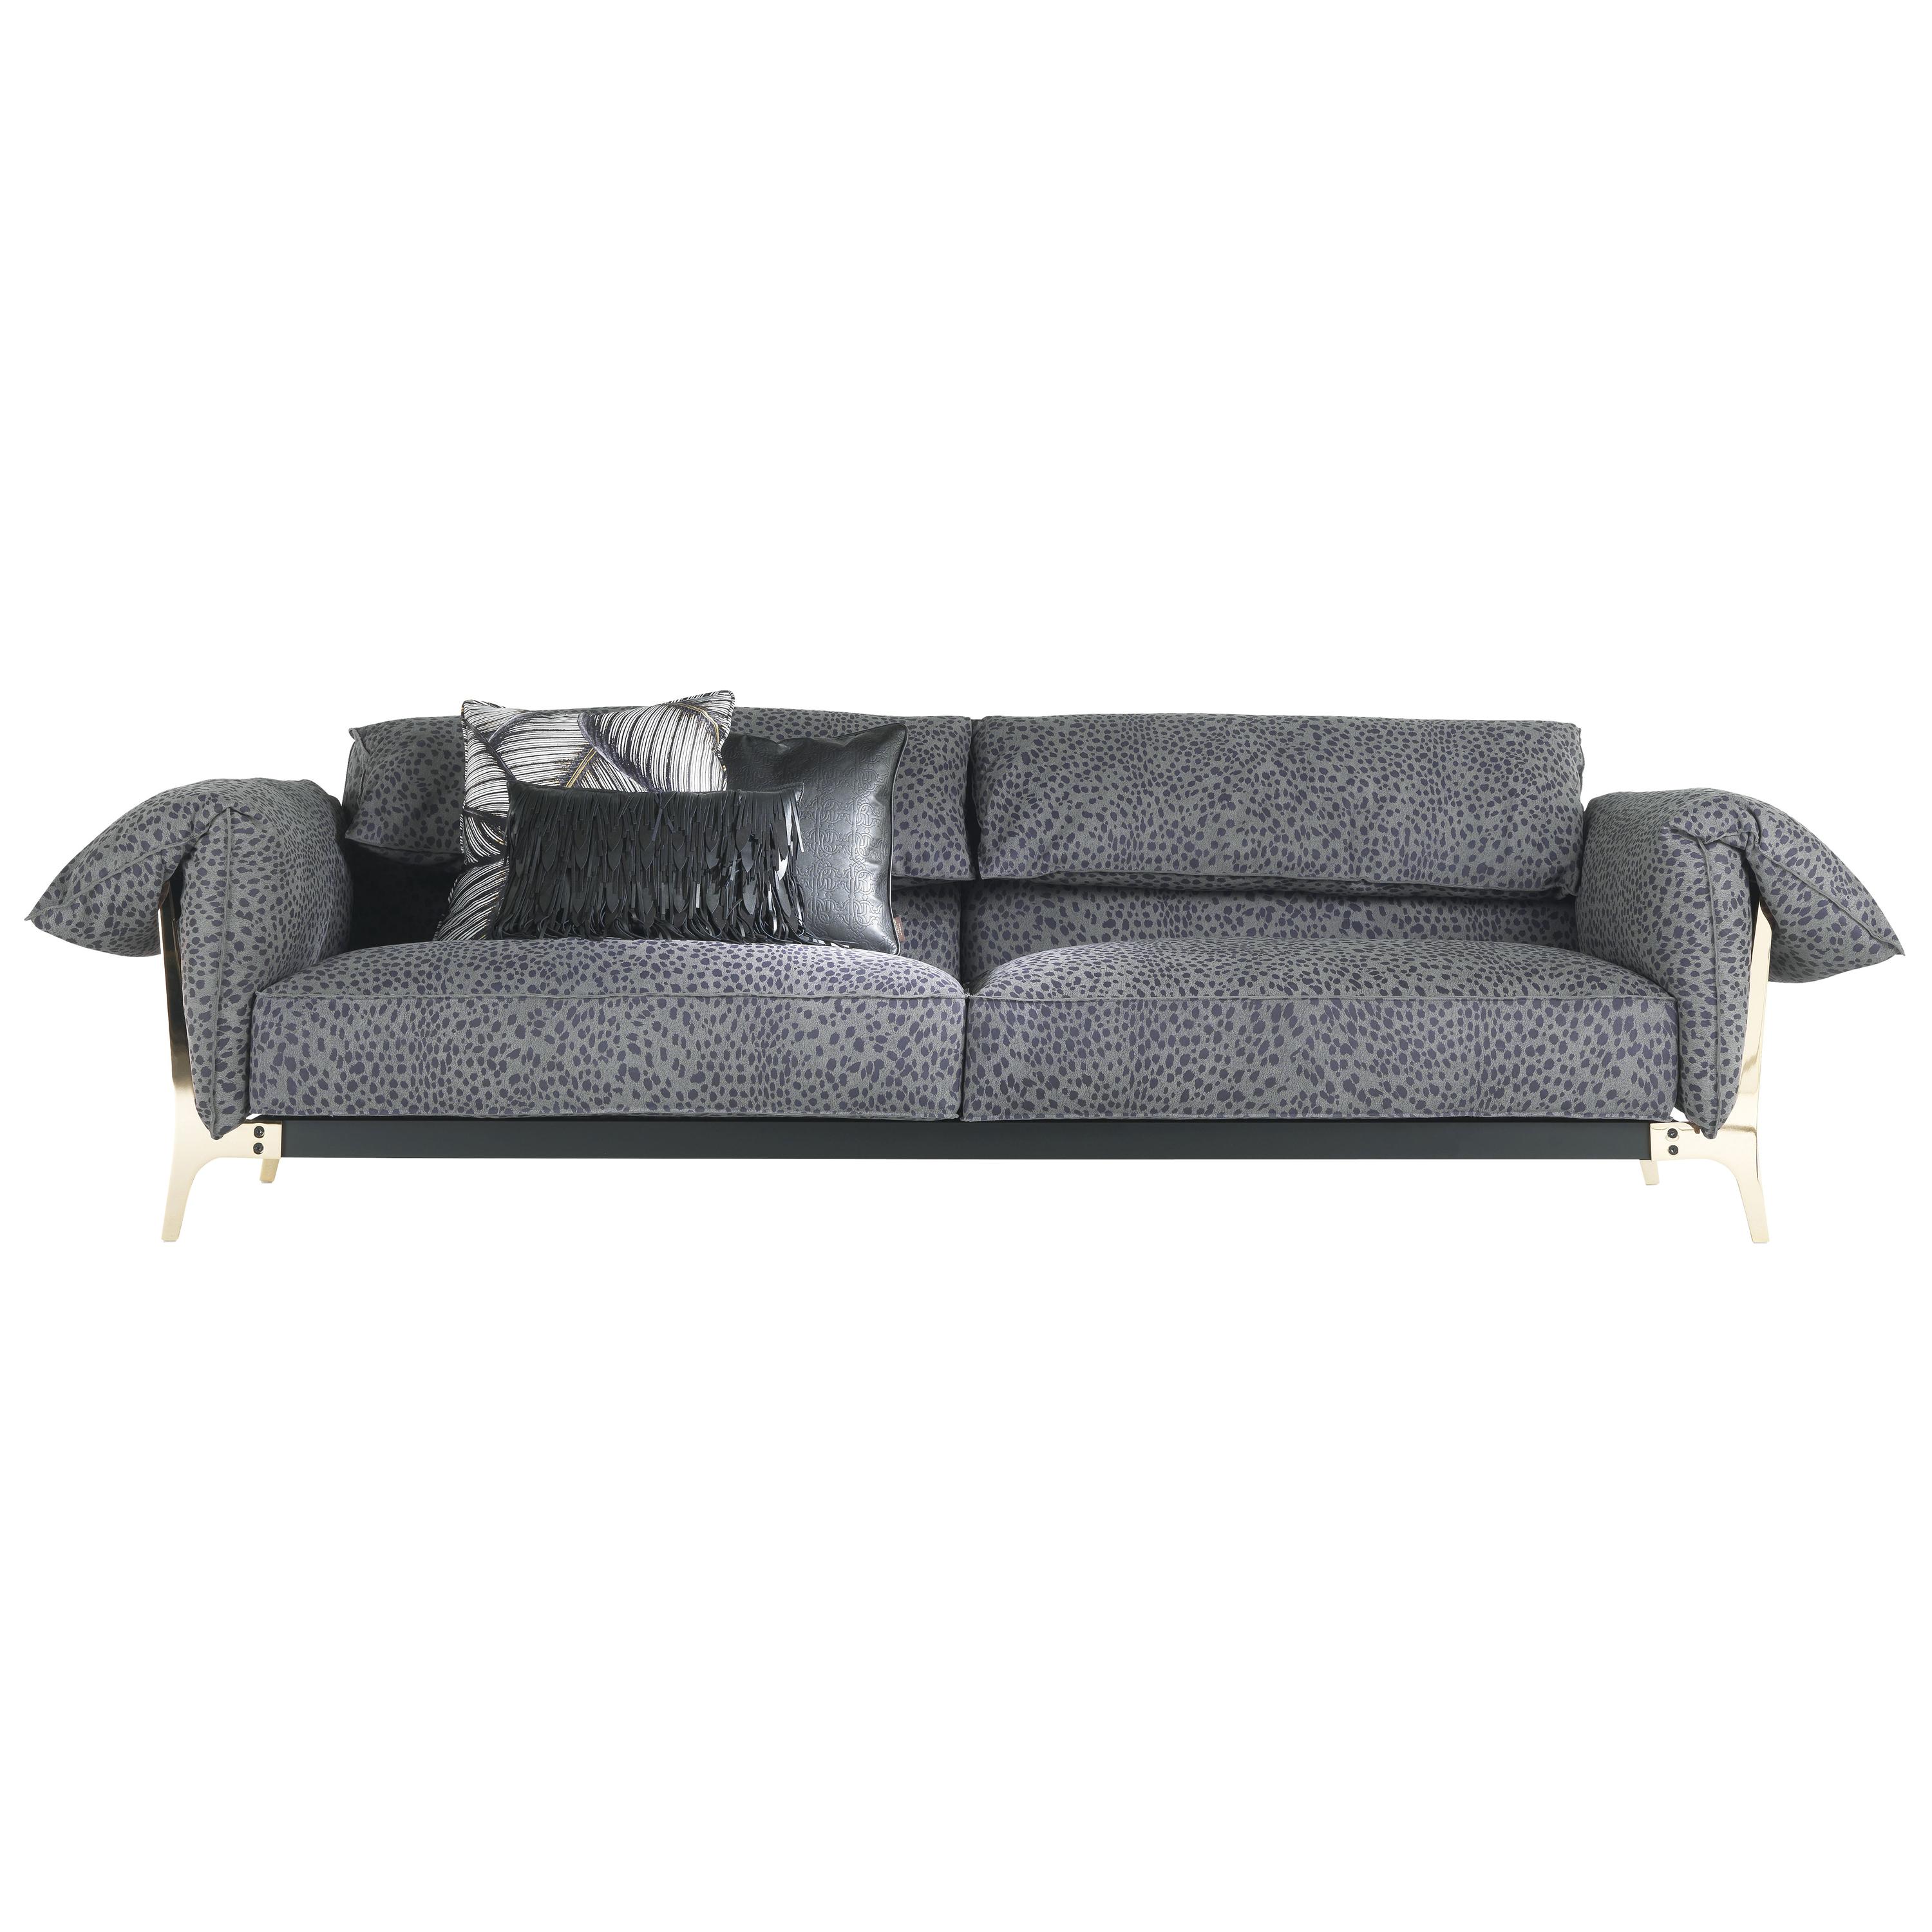  Roberto Cavalli Home Interiors Montego 3-Seater Sofa in Leather 